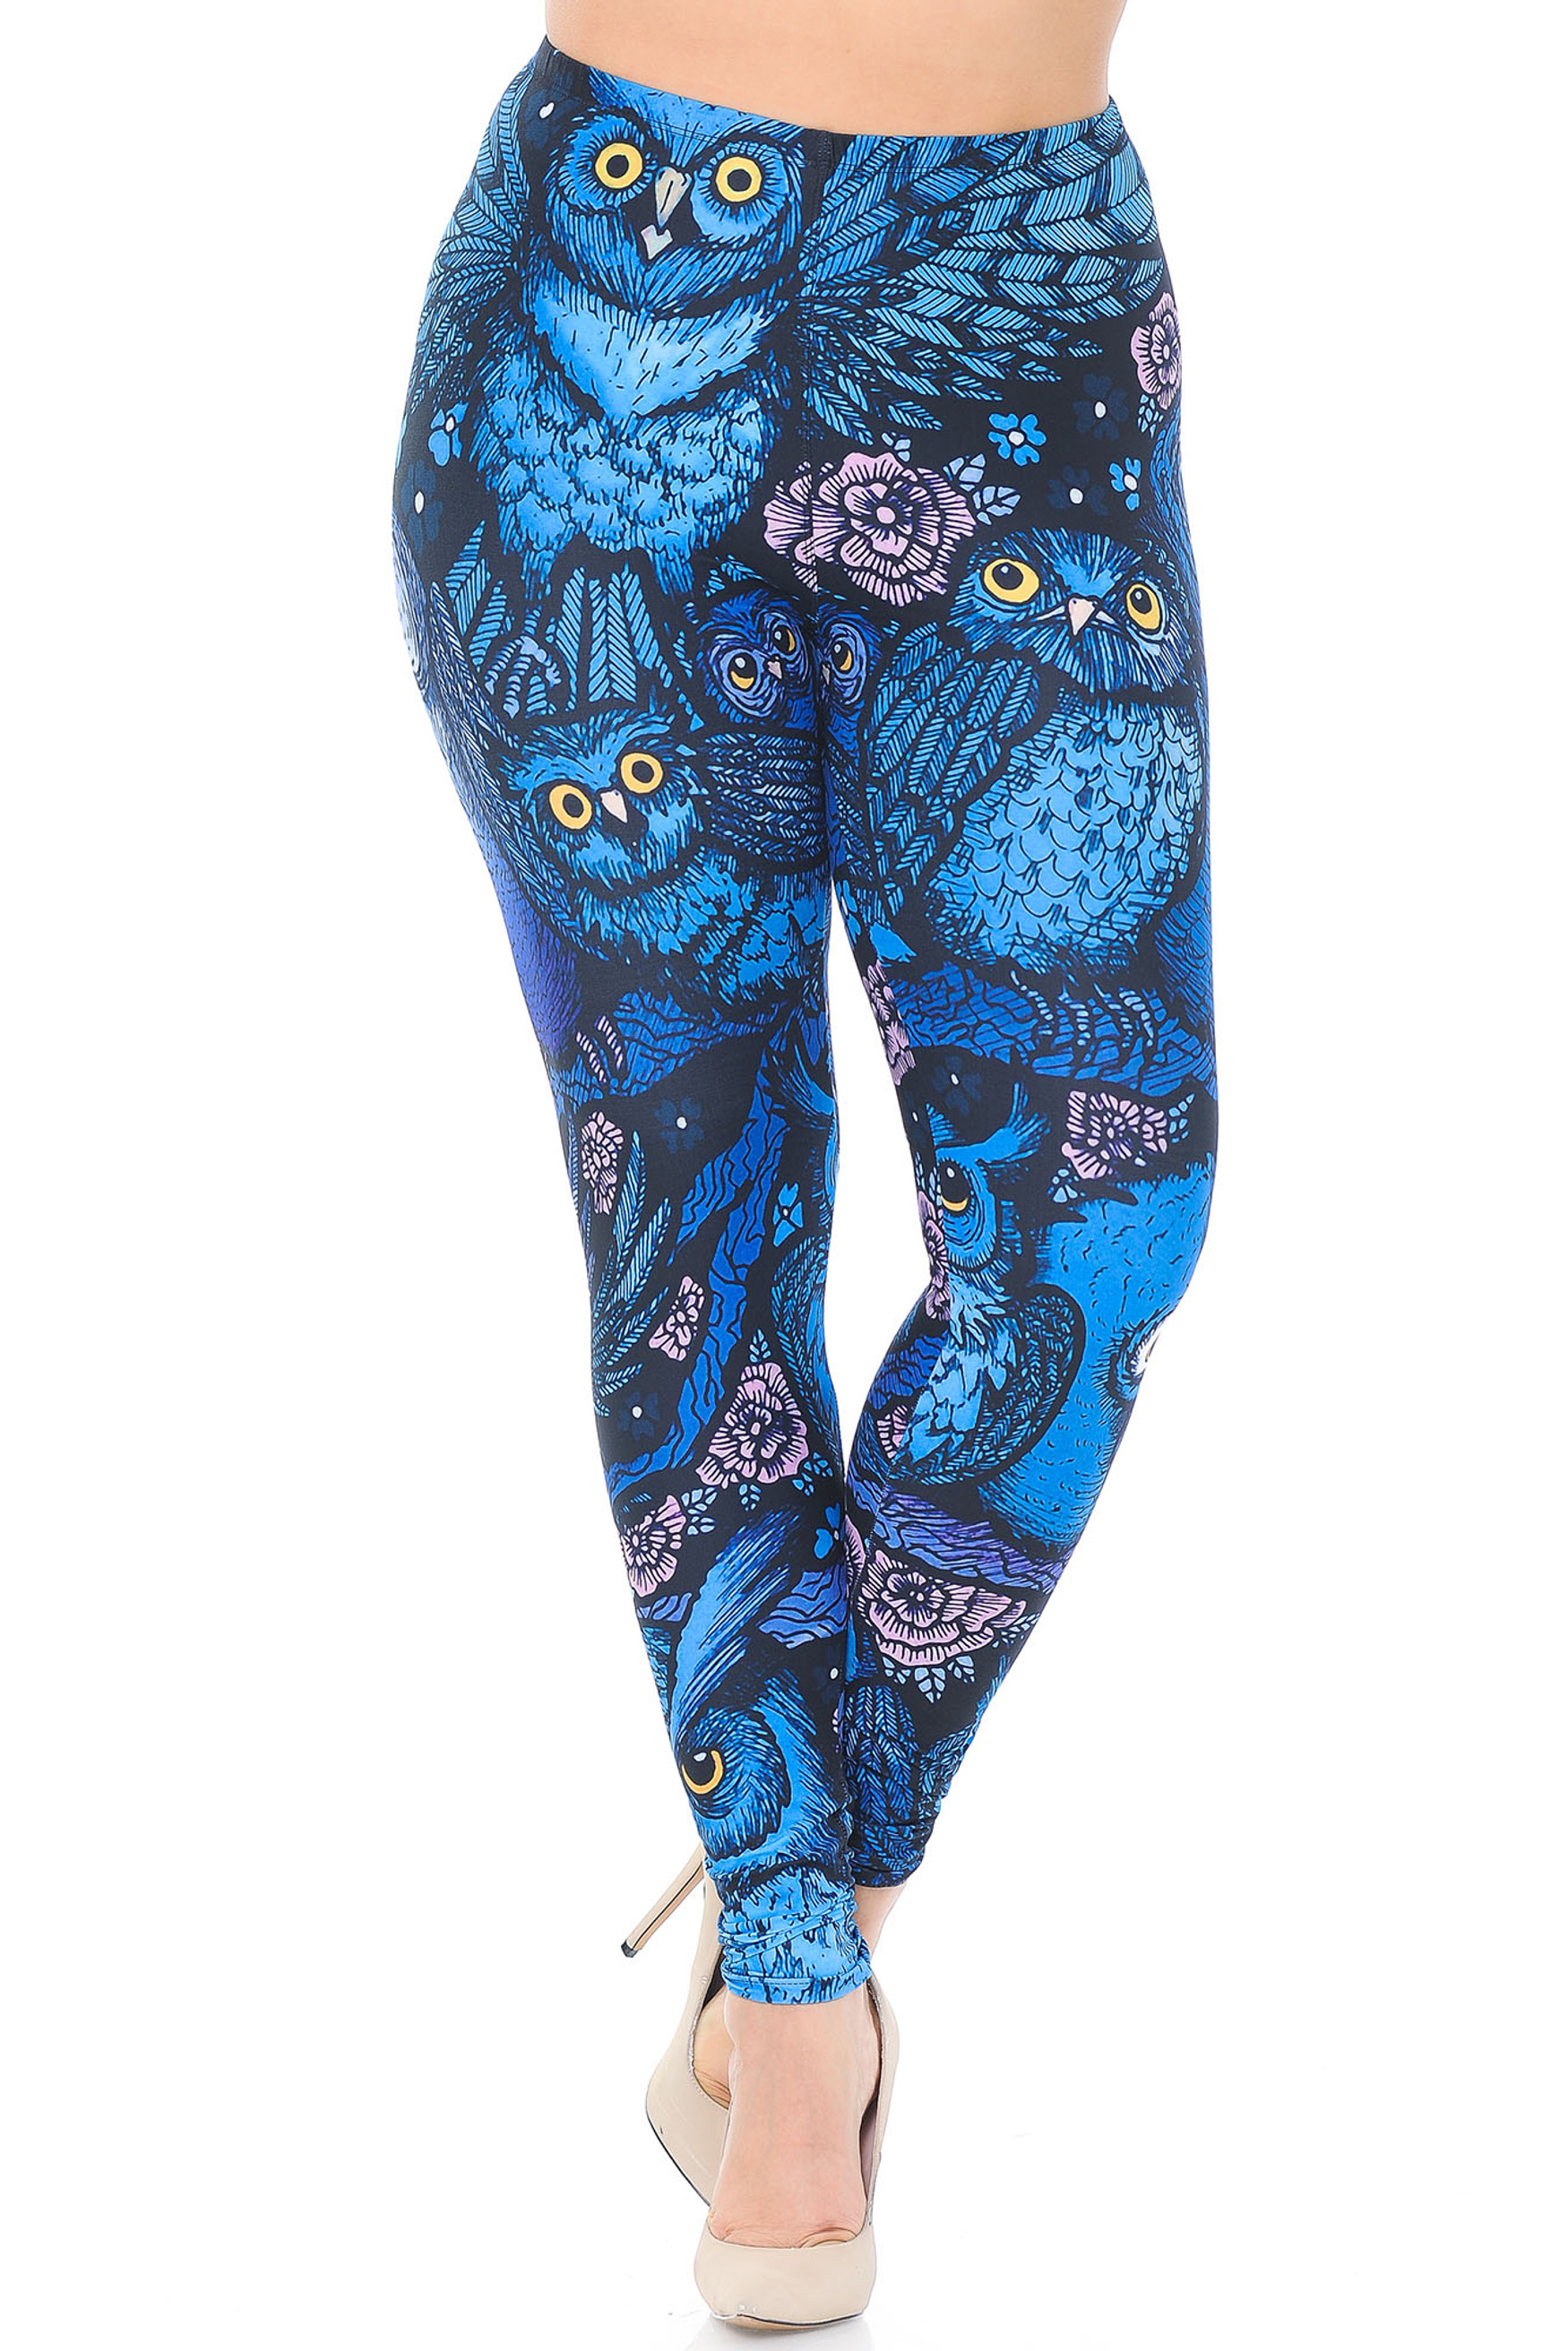 Creamy Soft Blue Owl Collage Extra Plus Size Leggings - 3X-5X - USA Fashion™